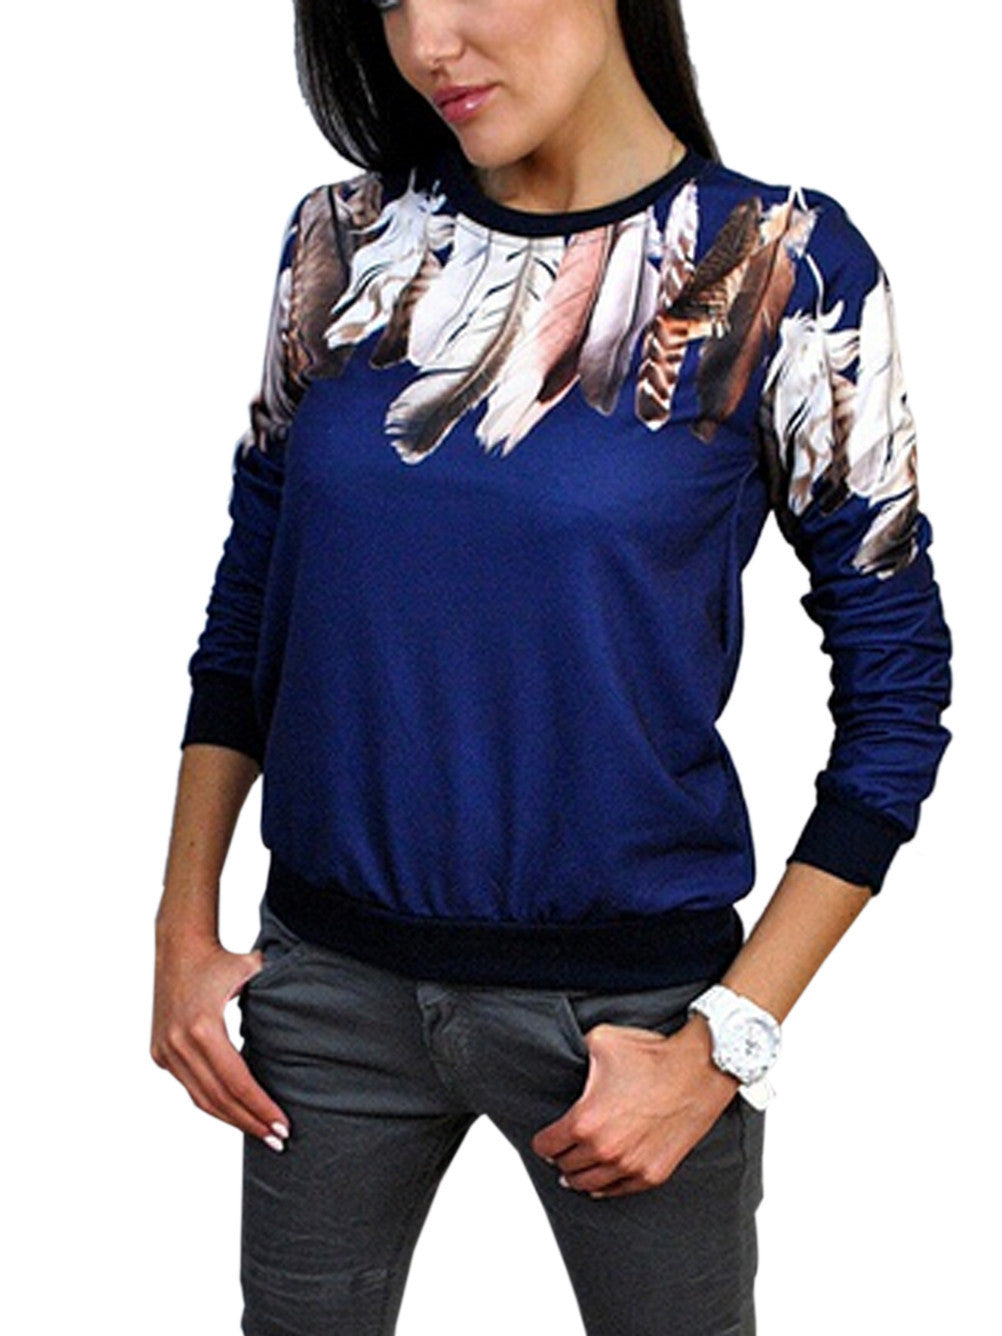 Print Three Quarter Women Shirt Crewneck Pullover Jumper Outwear Blouse Top Tracksuit Blue White Black 3 Color